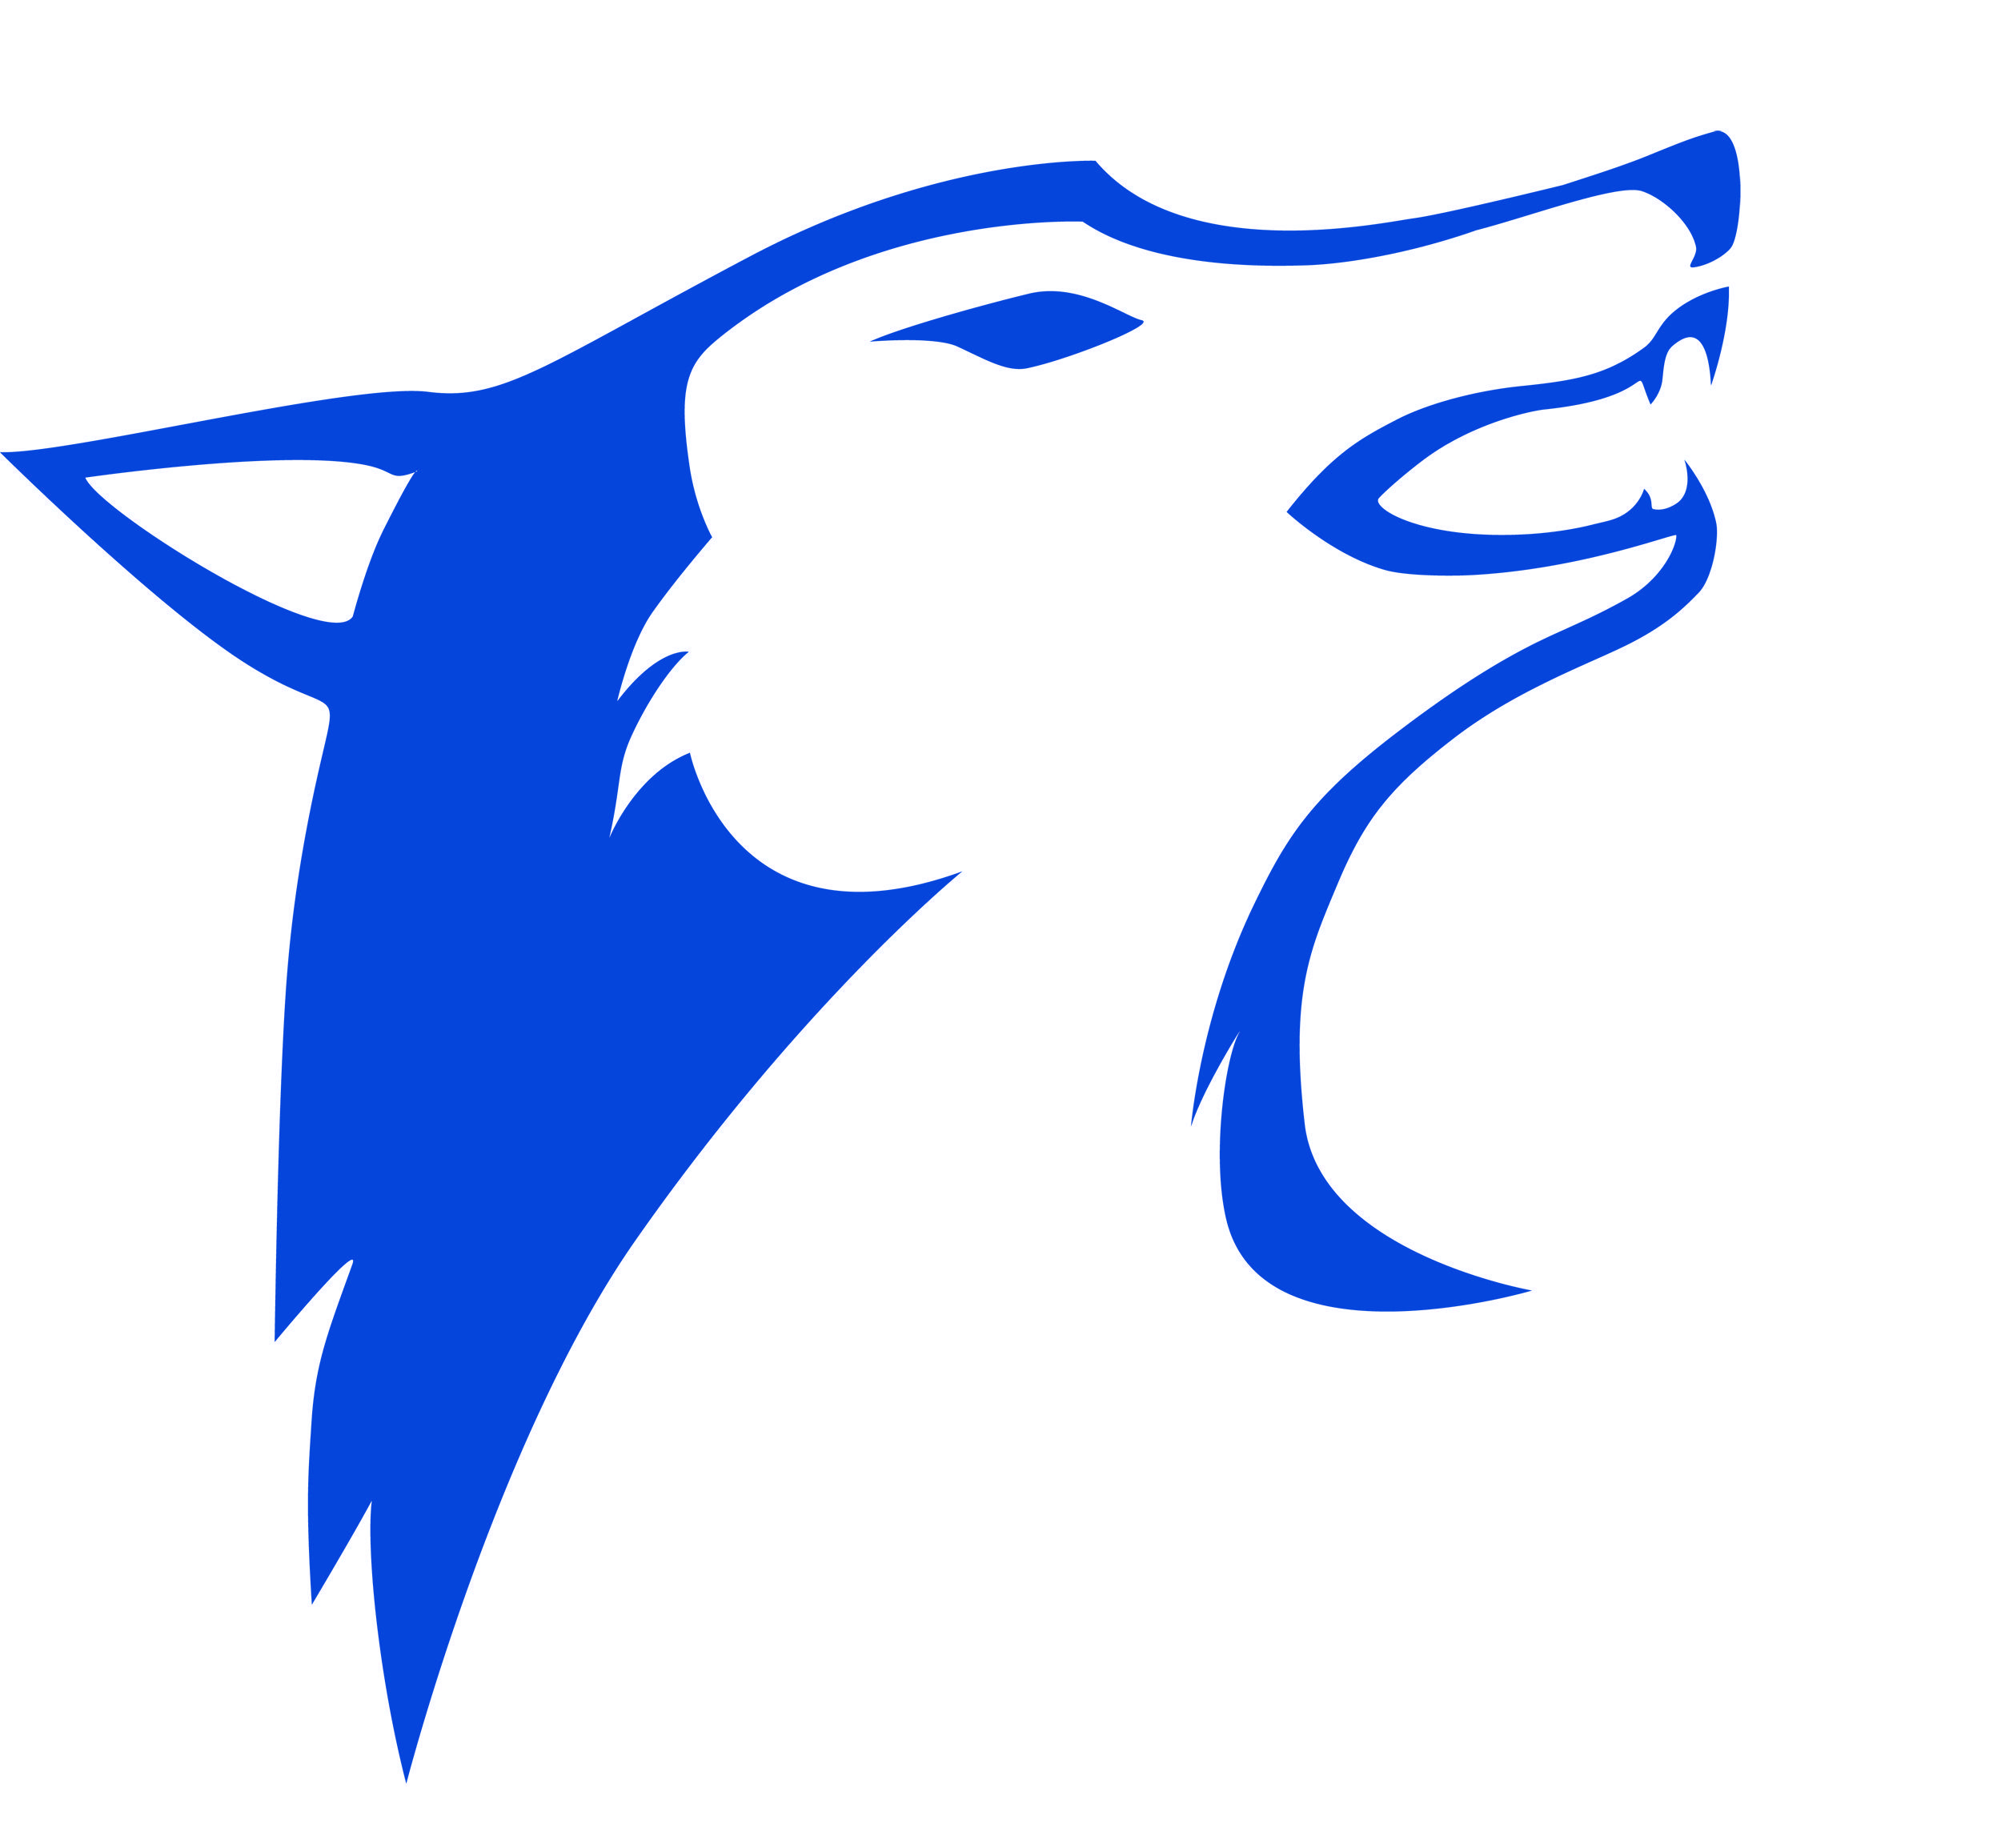 College Wolf Logo - College Wolf Logos free image